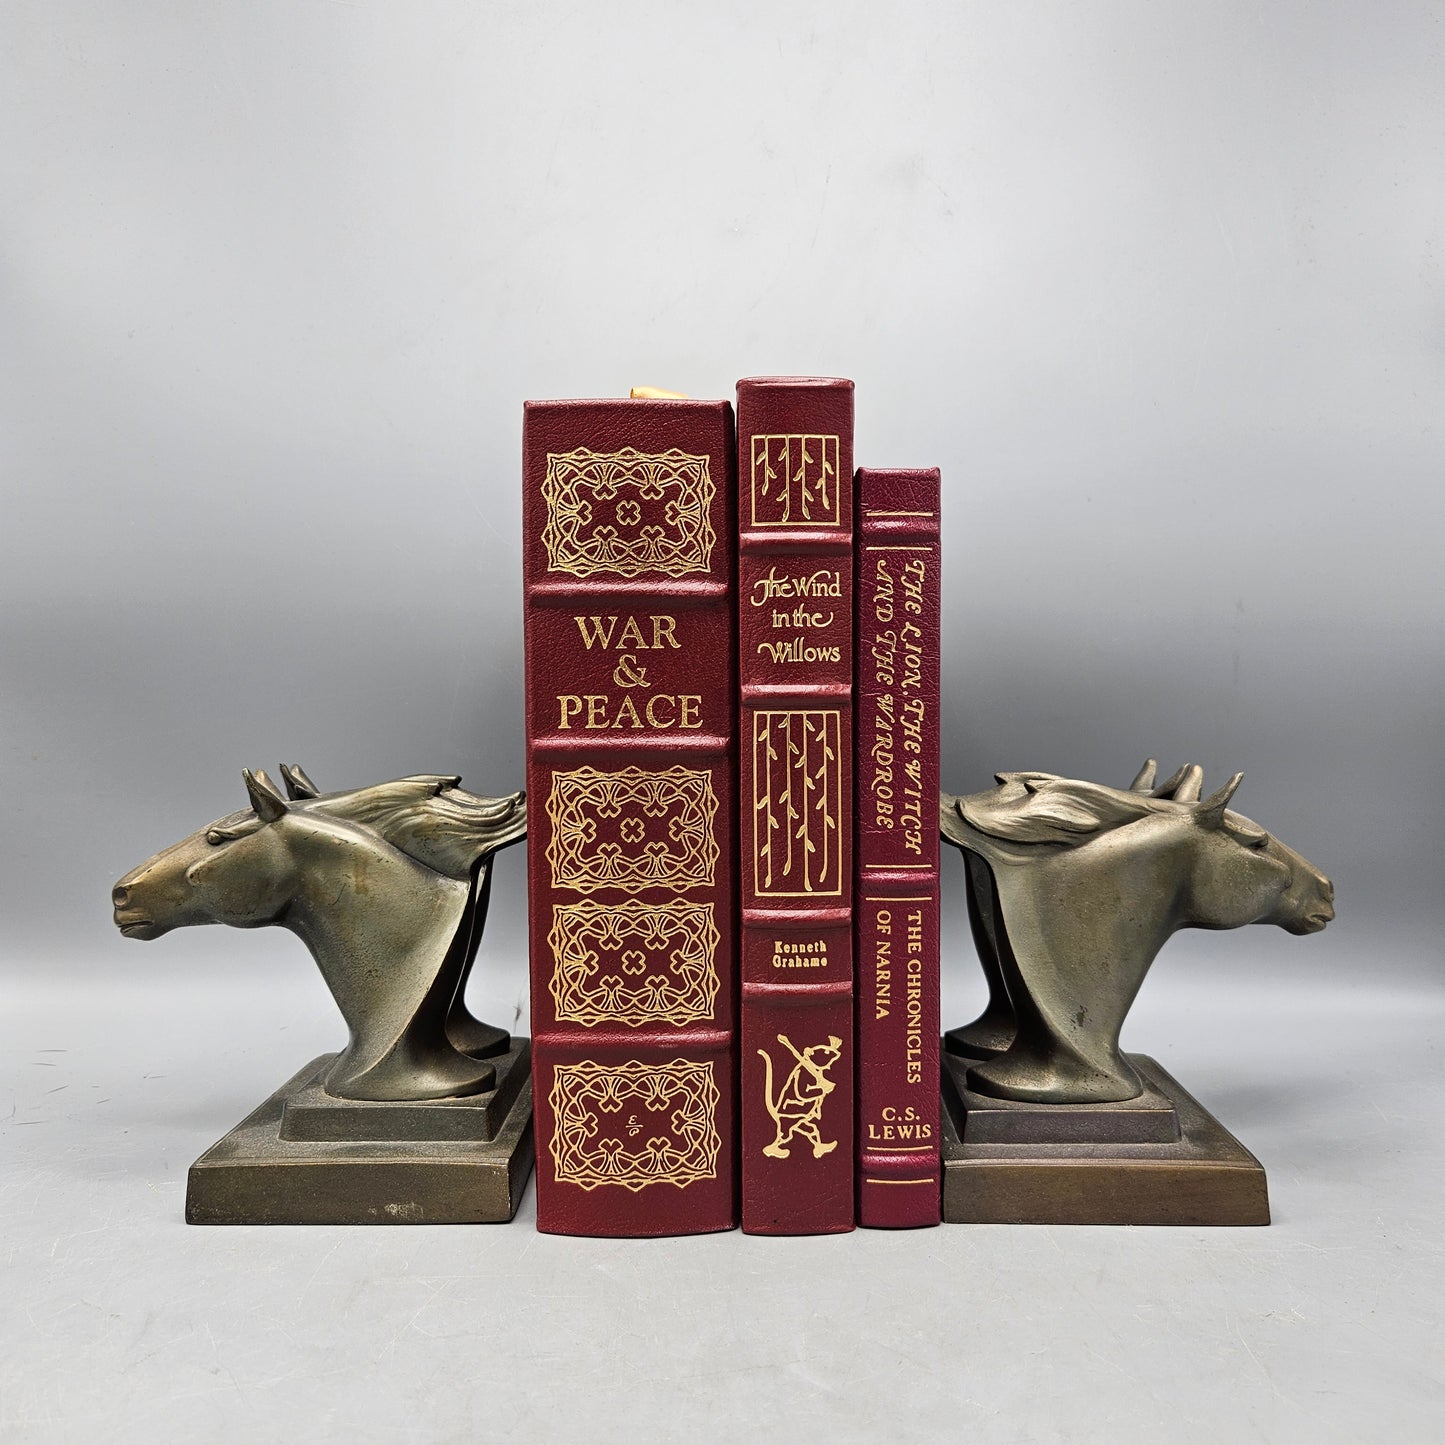 1920s Art Deco Frankart Double Horse Head Bronze Bookends